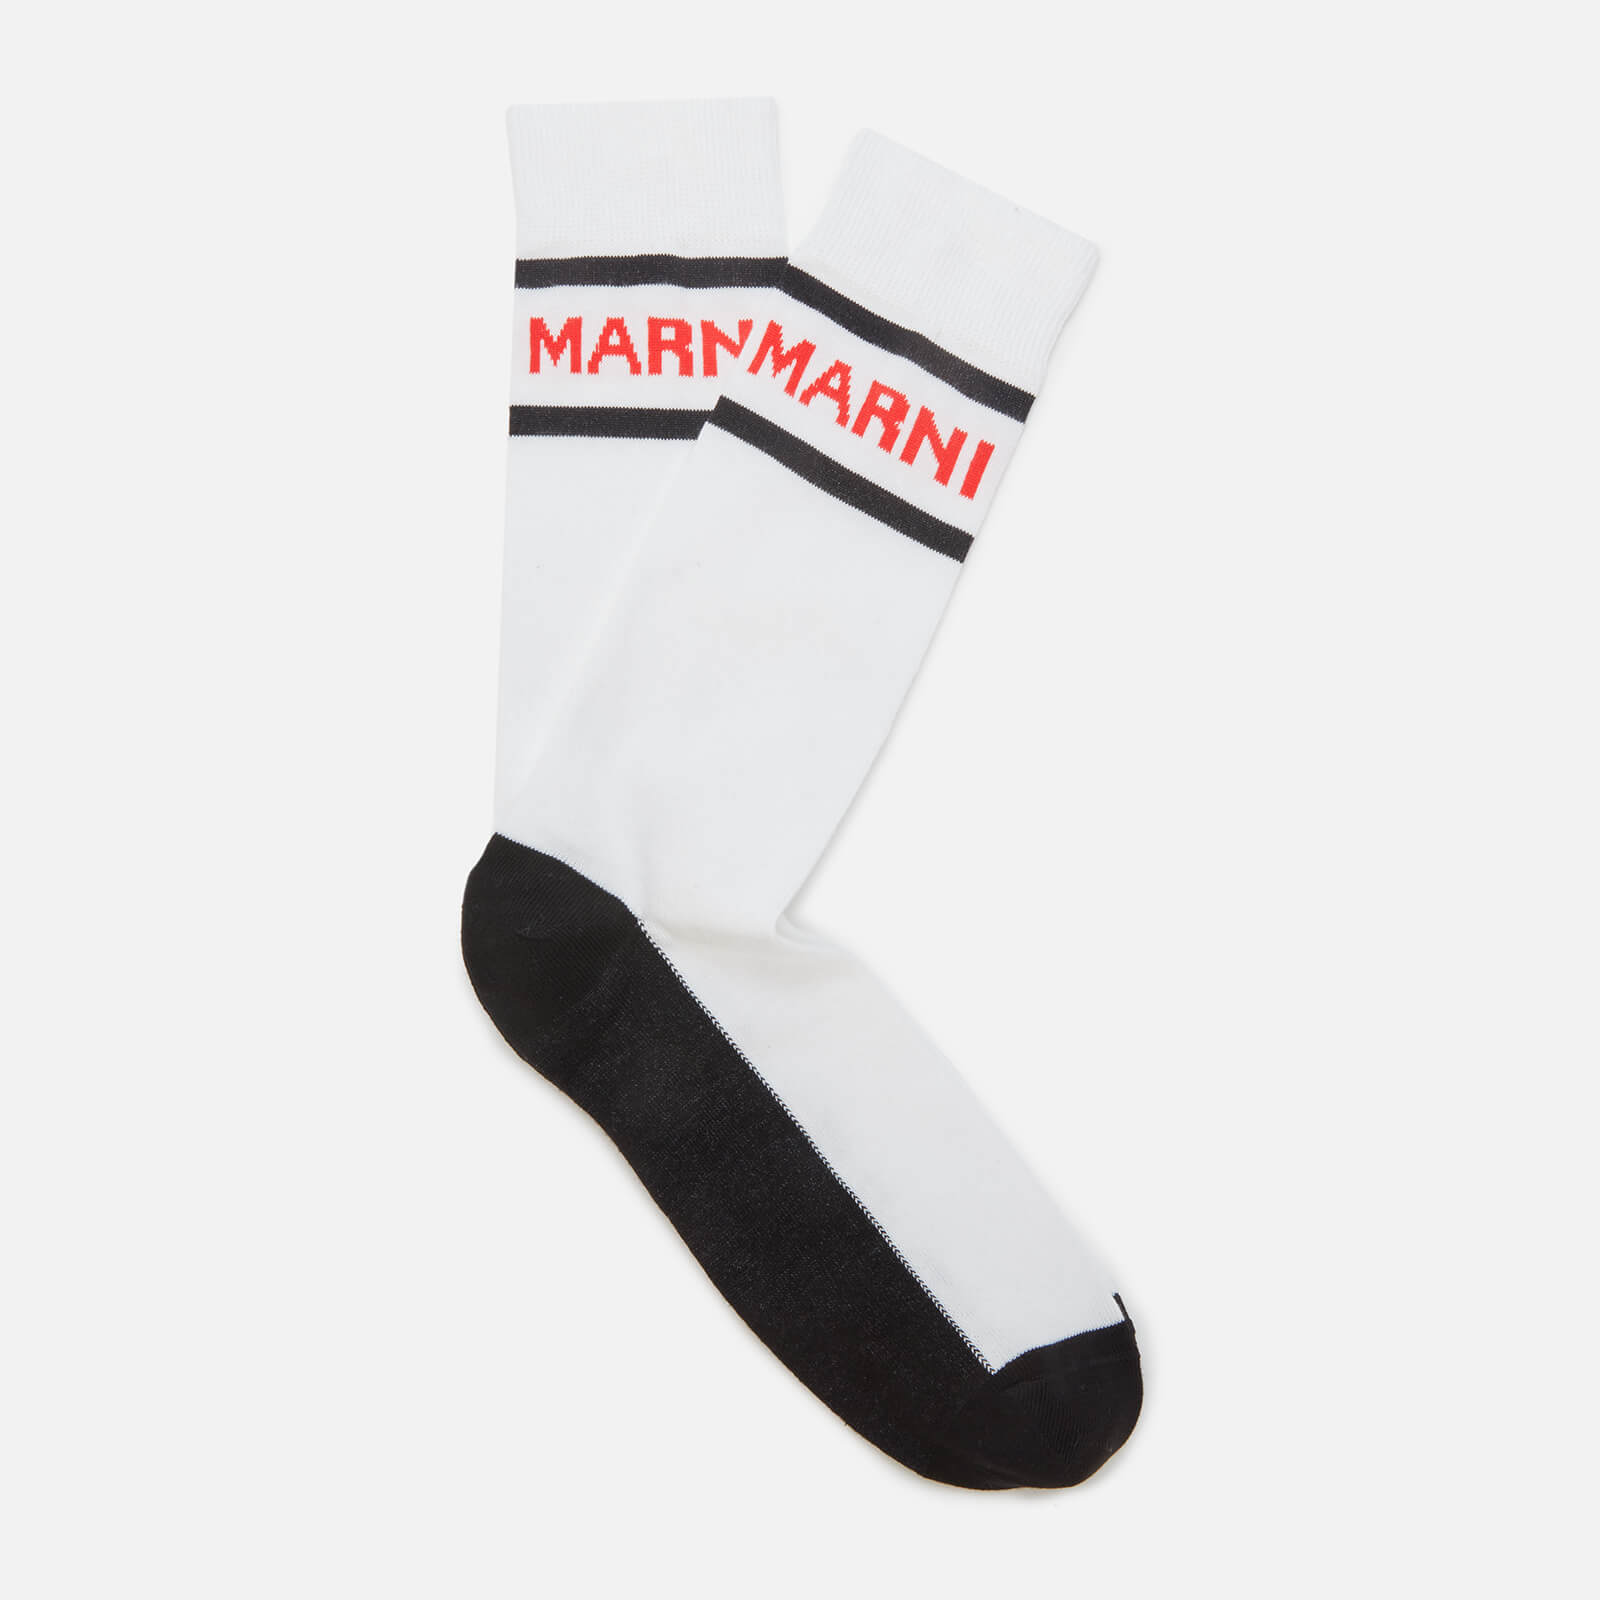 Marni Men's Sports Socks - Lilly White - M